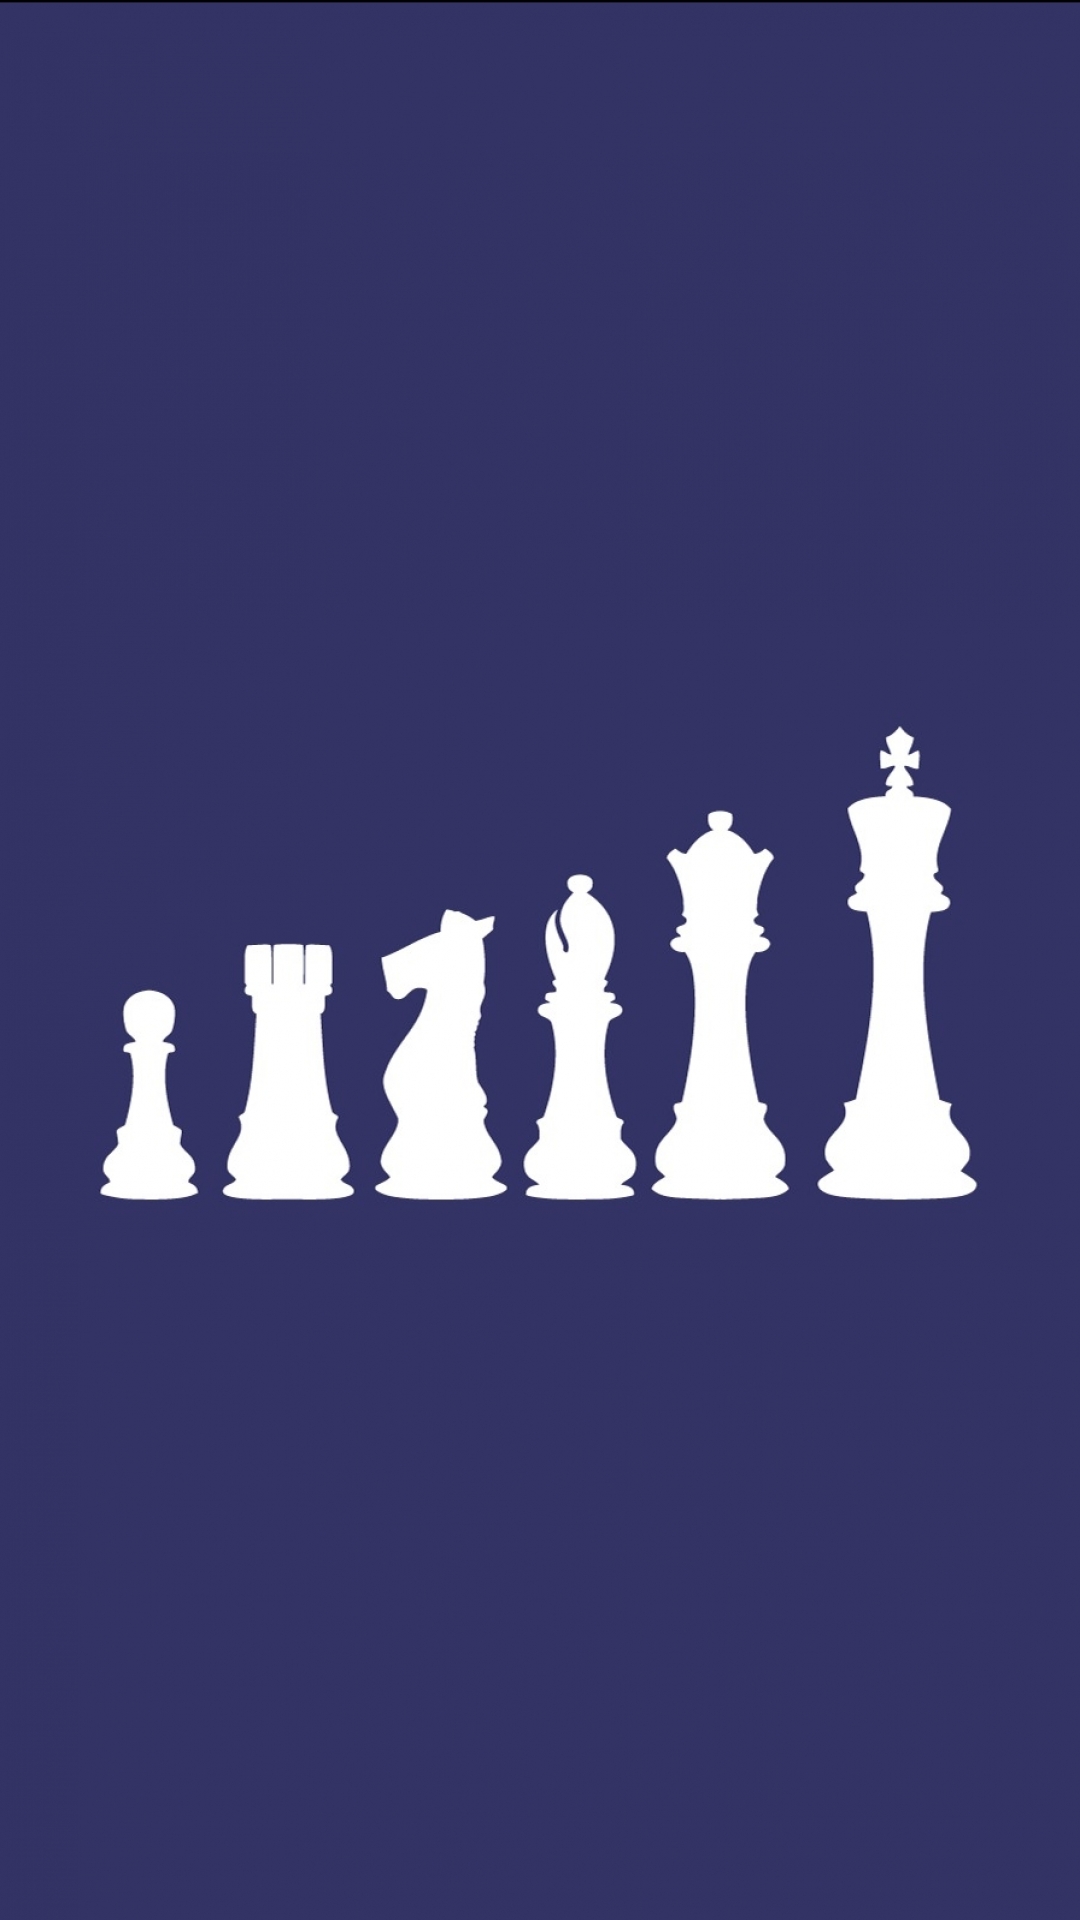 Chess Board 640 x 1136 iPhone 5 Wallpaper